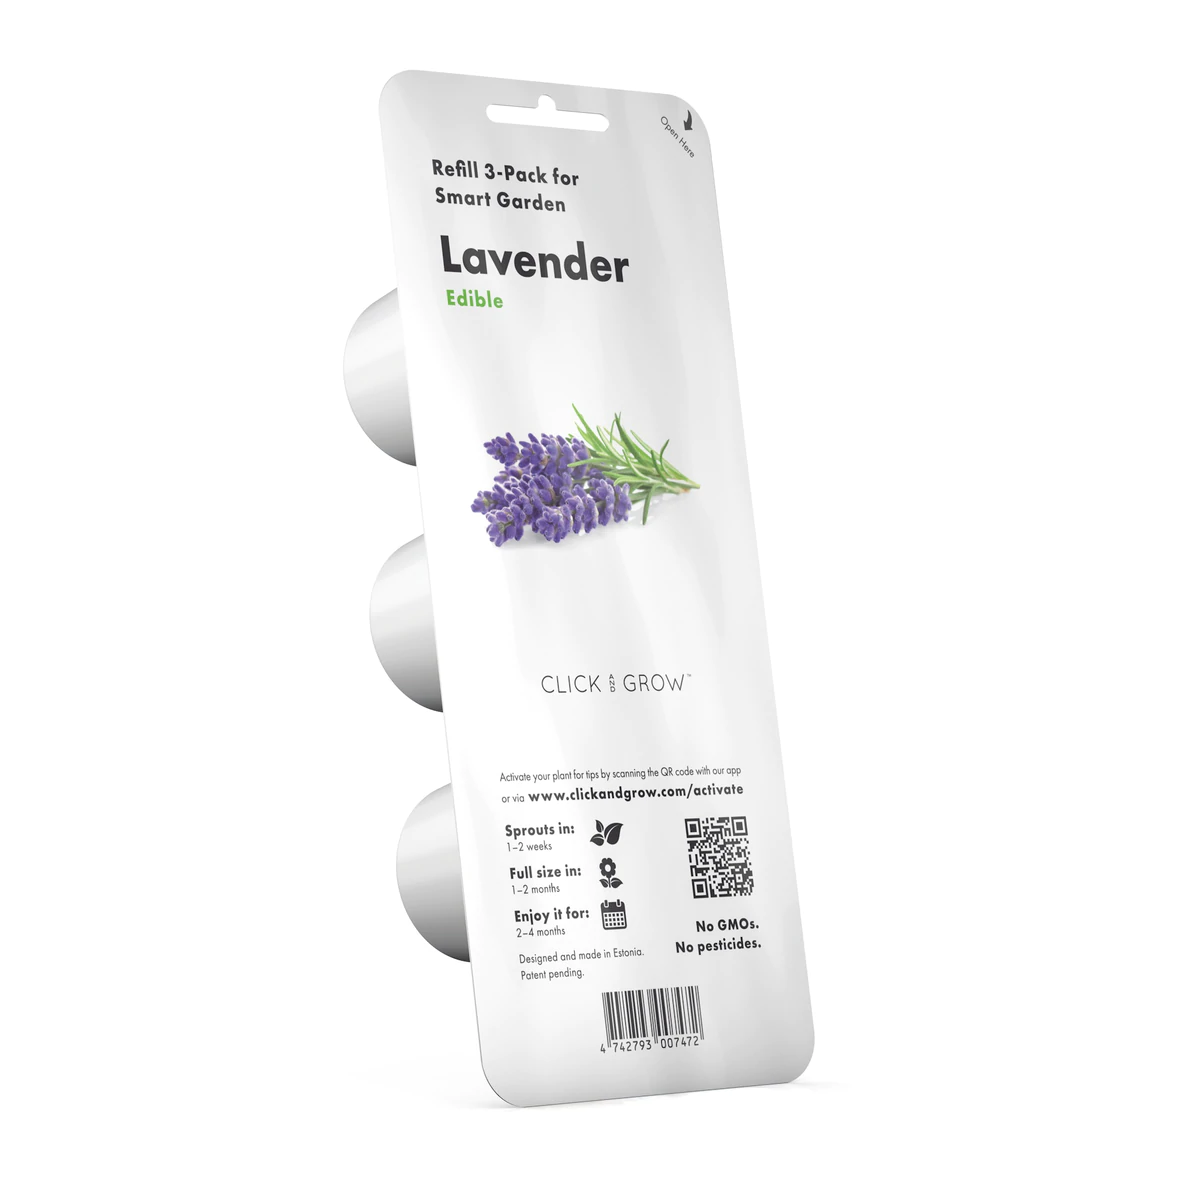 Lavender Plant Pods for Smart Garden